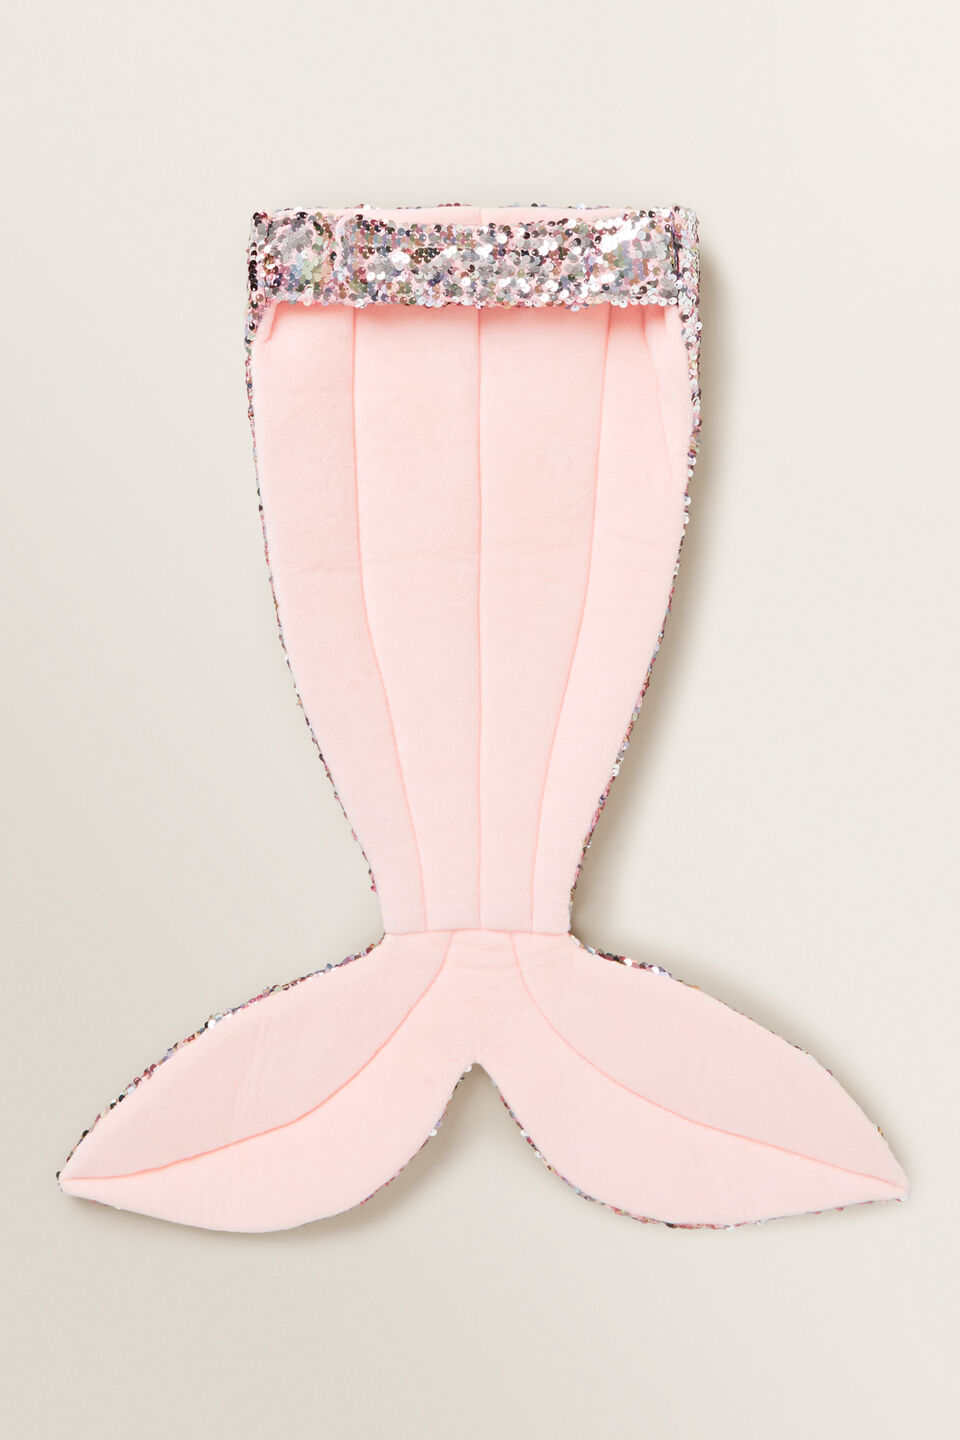 Mermaid Tail Dress Up  